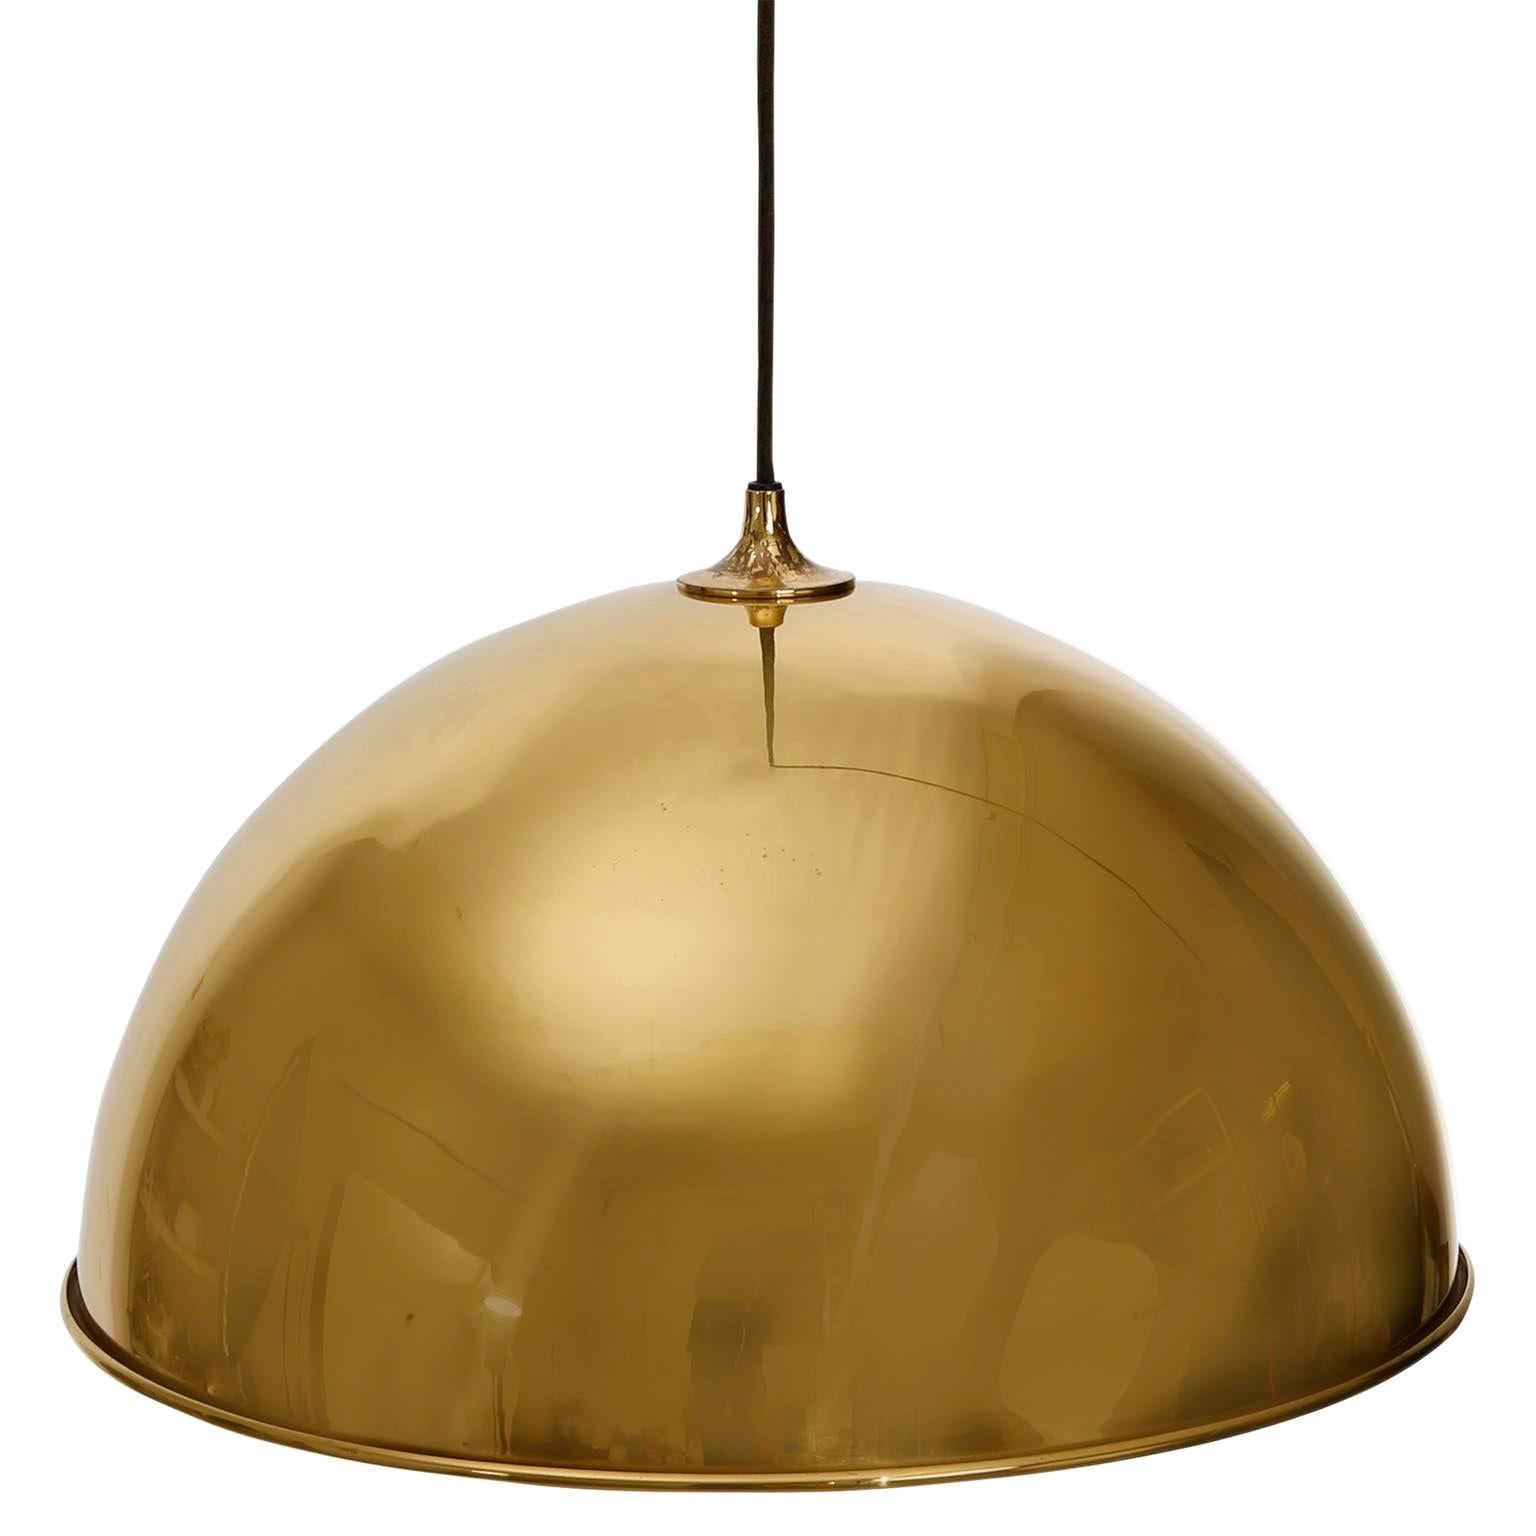 Florian Schulz Dome Pendant Light, Brass Counterweight Counter Balance, 1970 (Moderne der Mitte des Jahrhunderts)